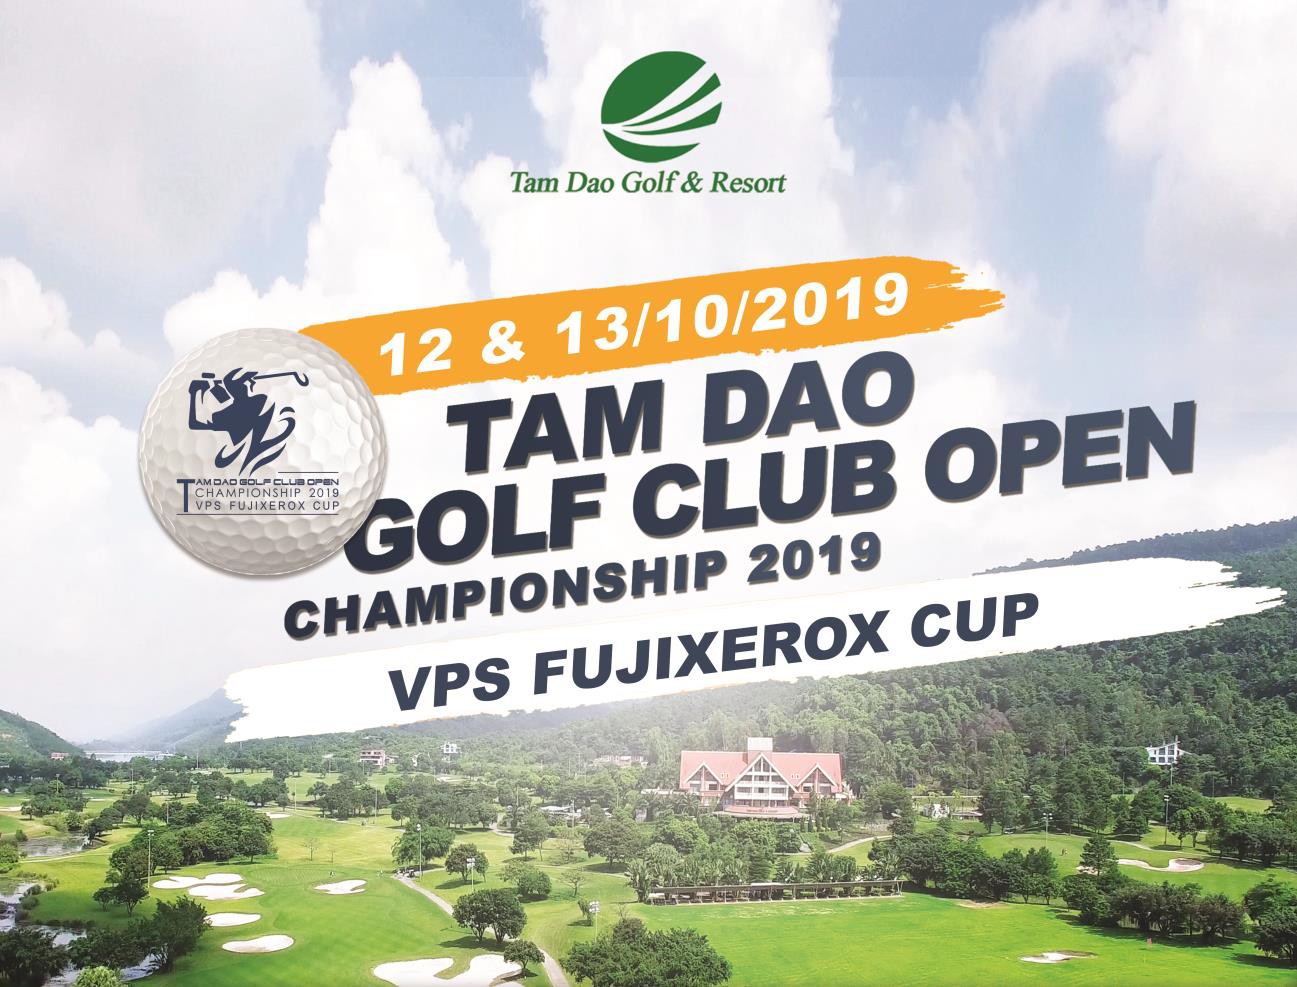 “Tam Dao Golf Club Open Championship 2019 –VPS FujiXerox Cup”